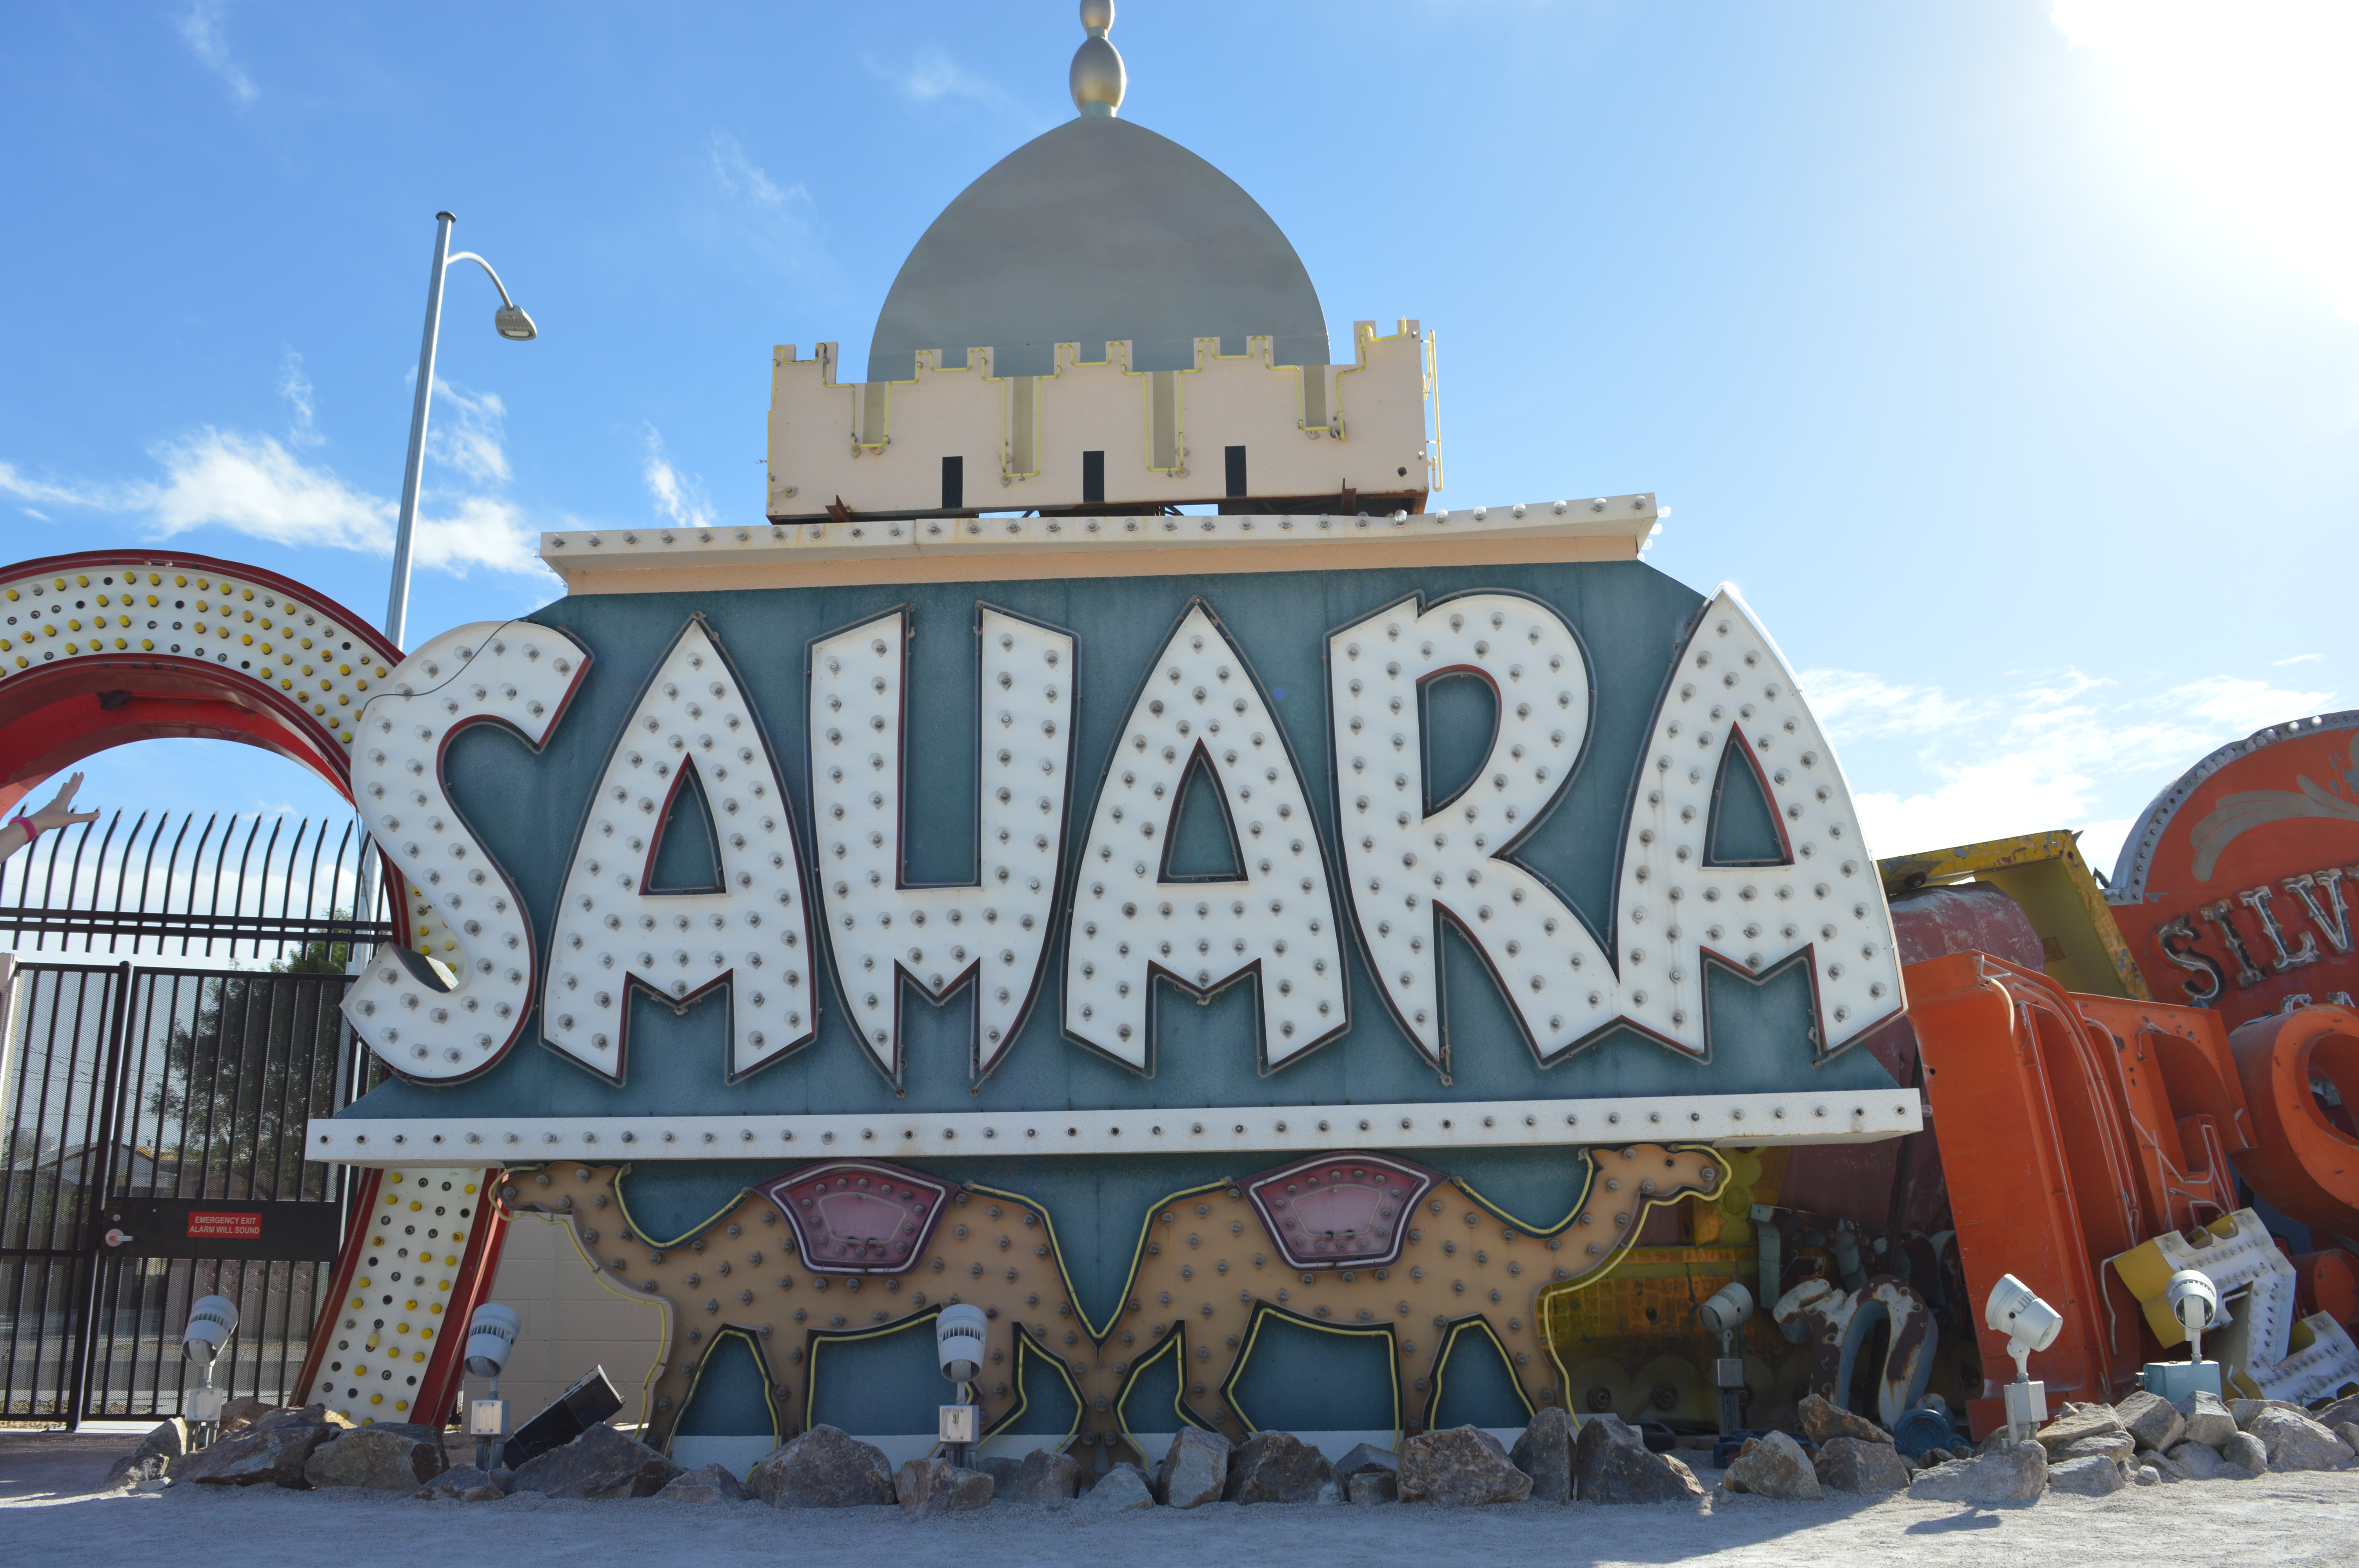 Sahara Hotel The Neon Boneyard Museum | Las Vegas | What should I do in Las Vegas? | Travel tips for Las Vegas Nevada | Travel Blog | Elle Blonde Luxury Lifestyle Destination Blog